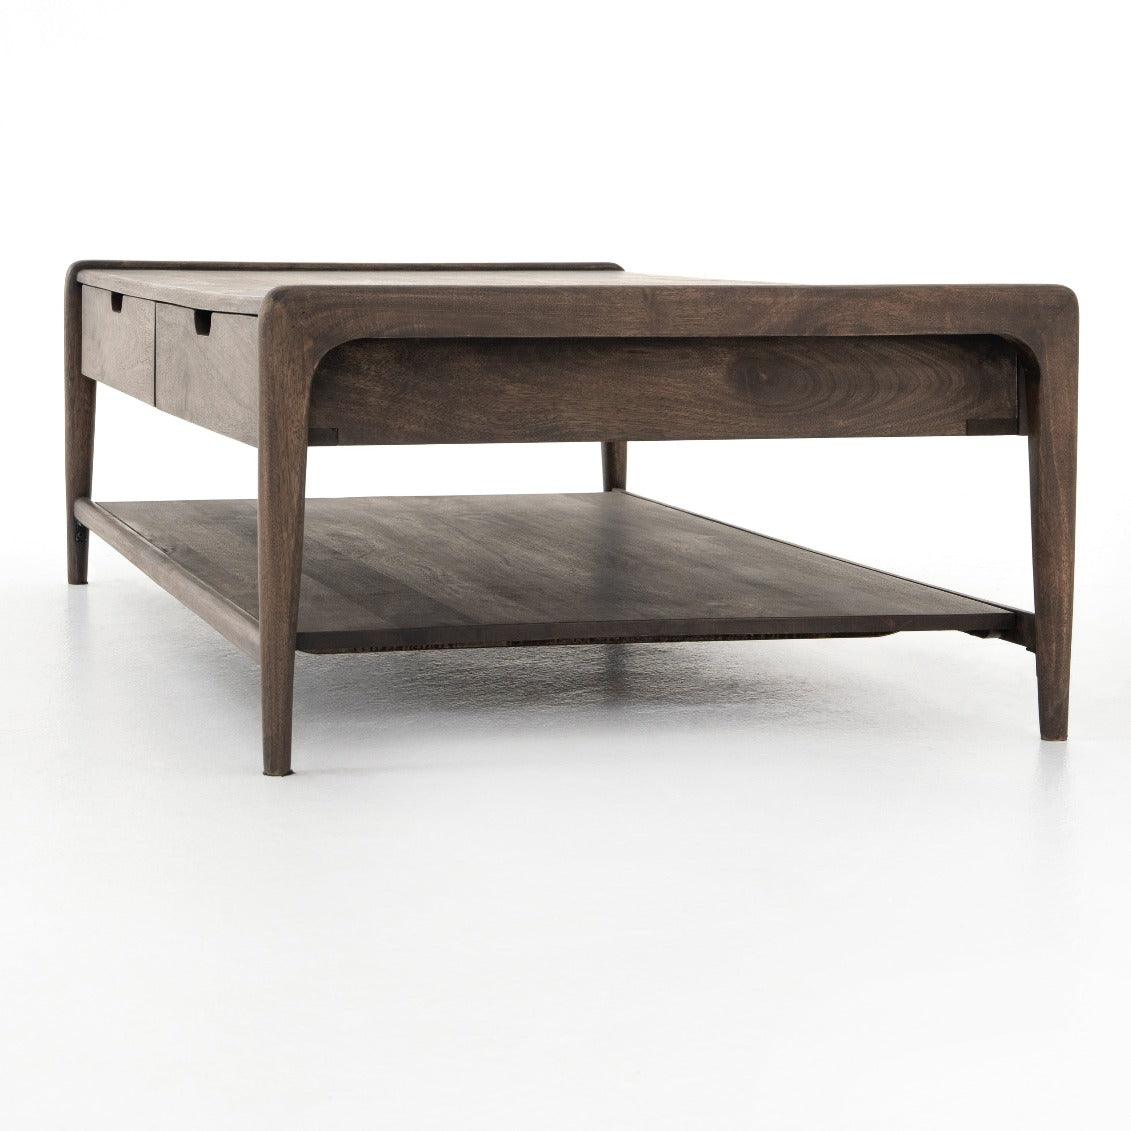 VALERIA COFFEE TABLE - Reimagine Designs - coffee table, new